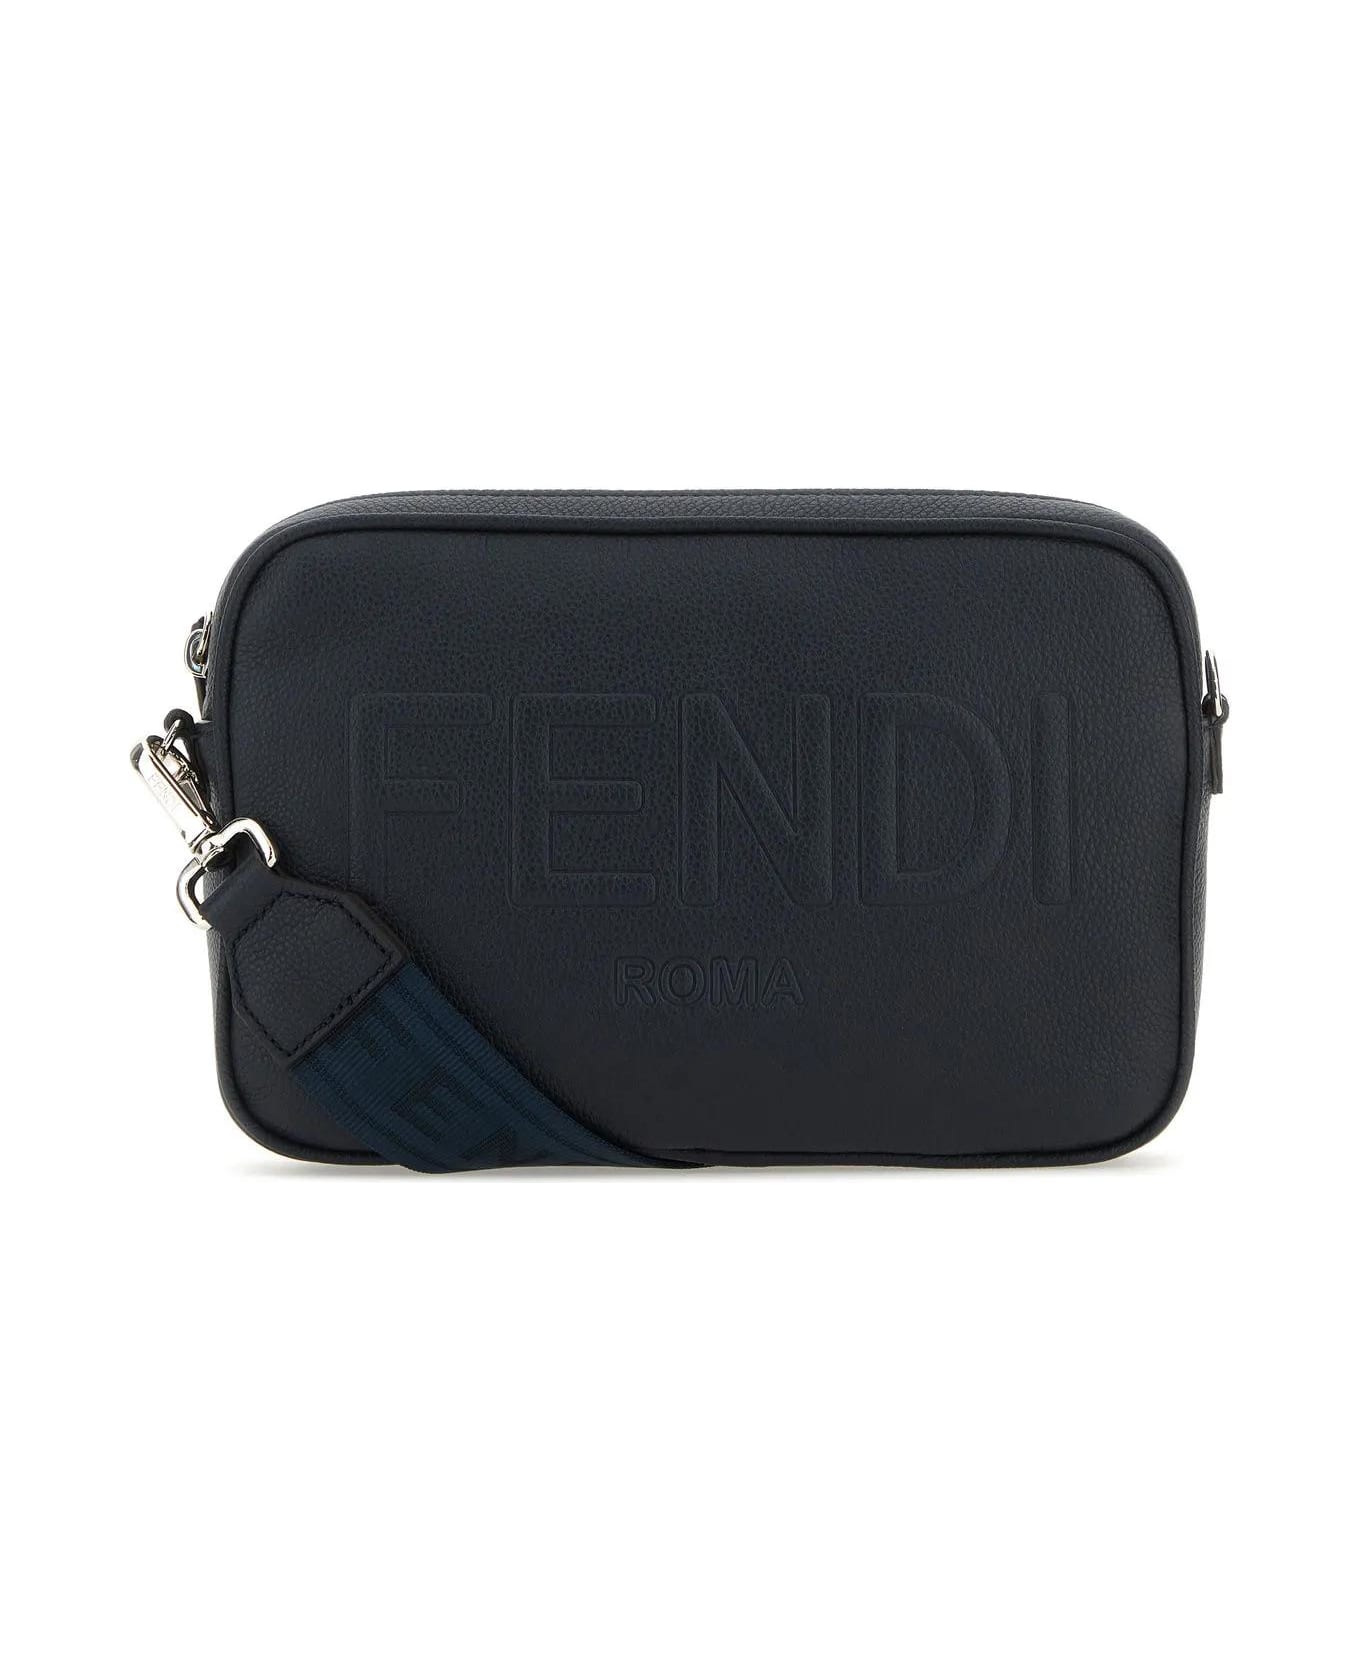 Fendi Navy Blue Leather Camera Case Crossbody Bag - NAVY